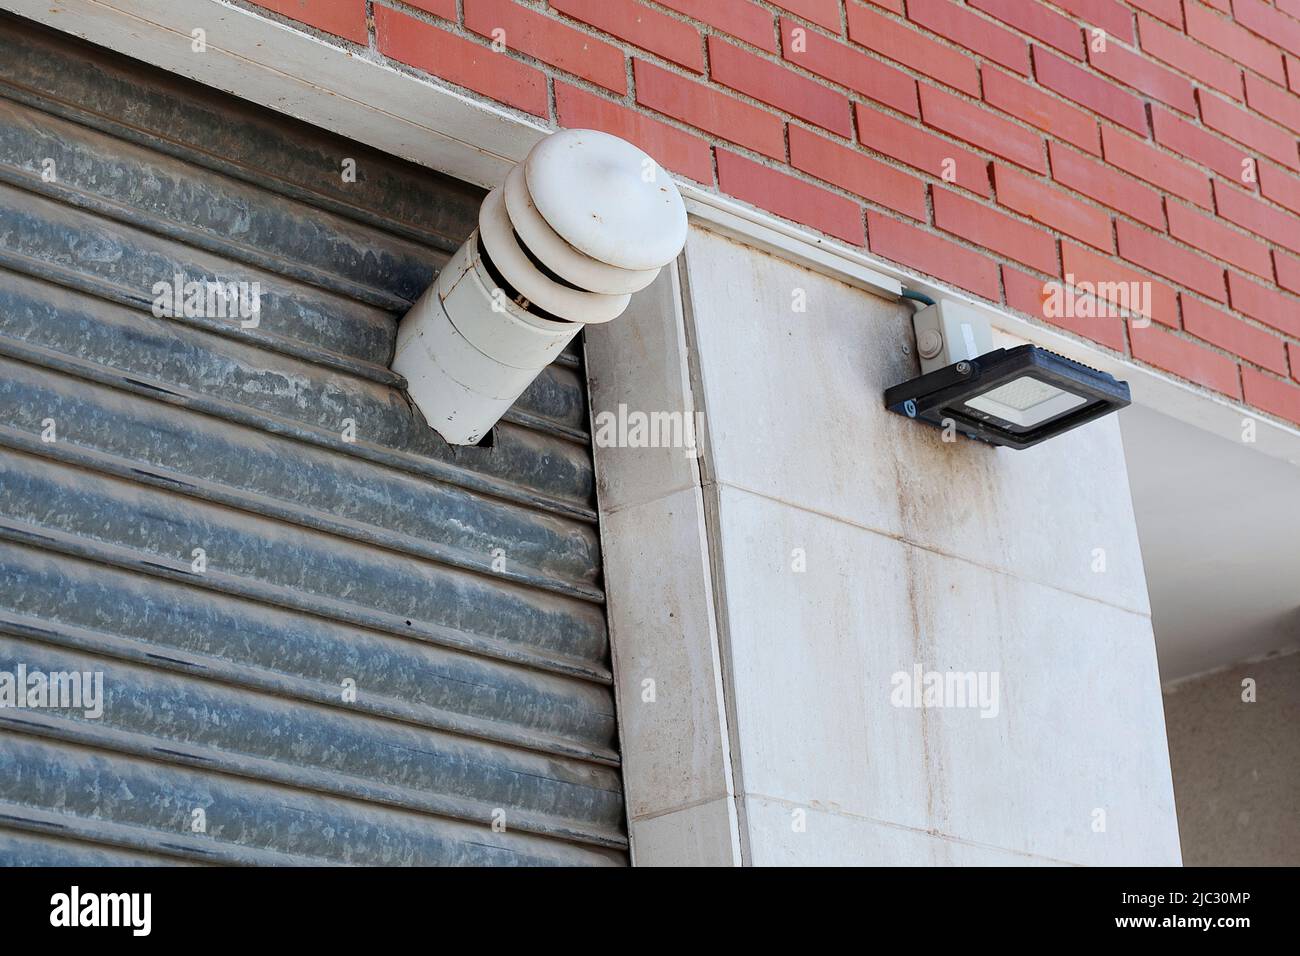 Chinese ventilation solution, Reus, Tarragona, Spai. Stock Photo